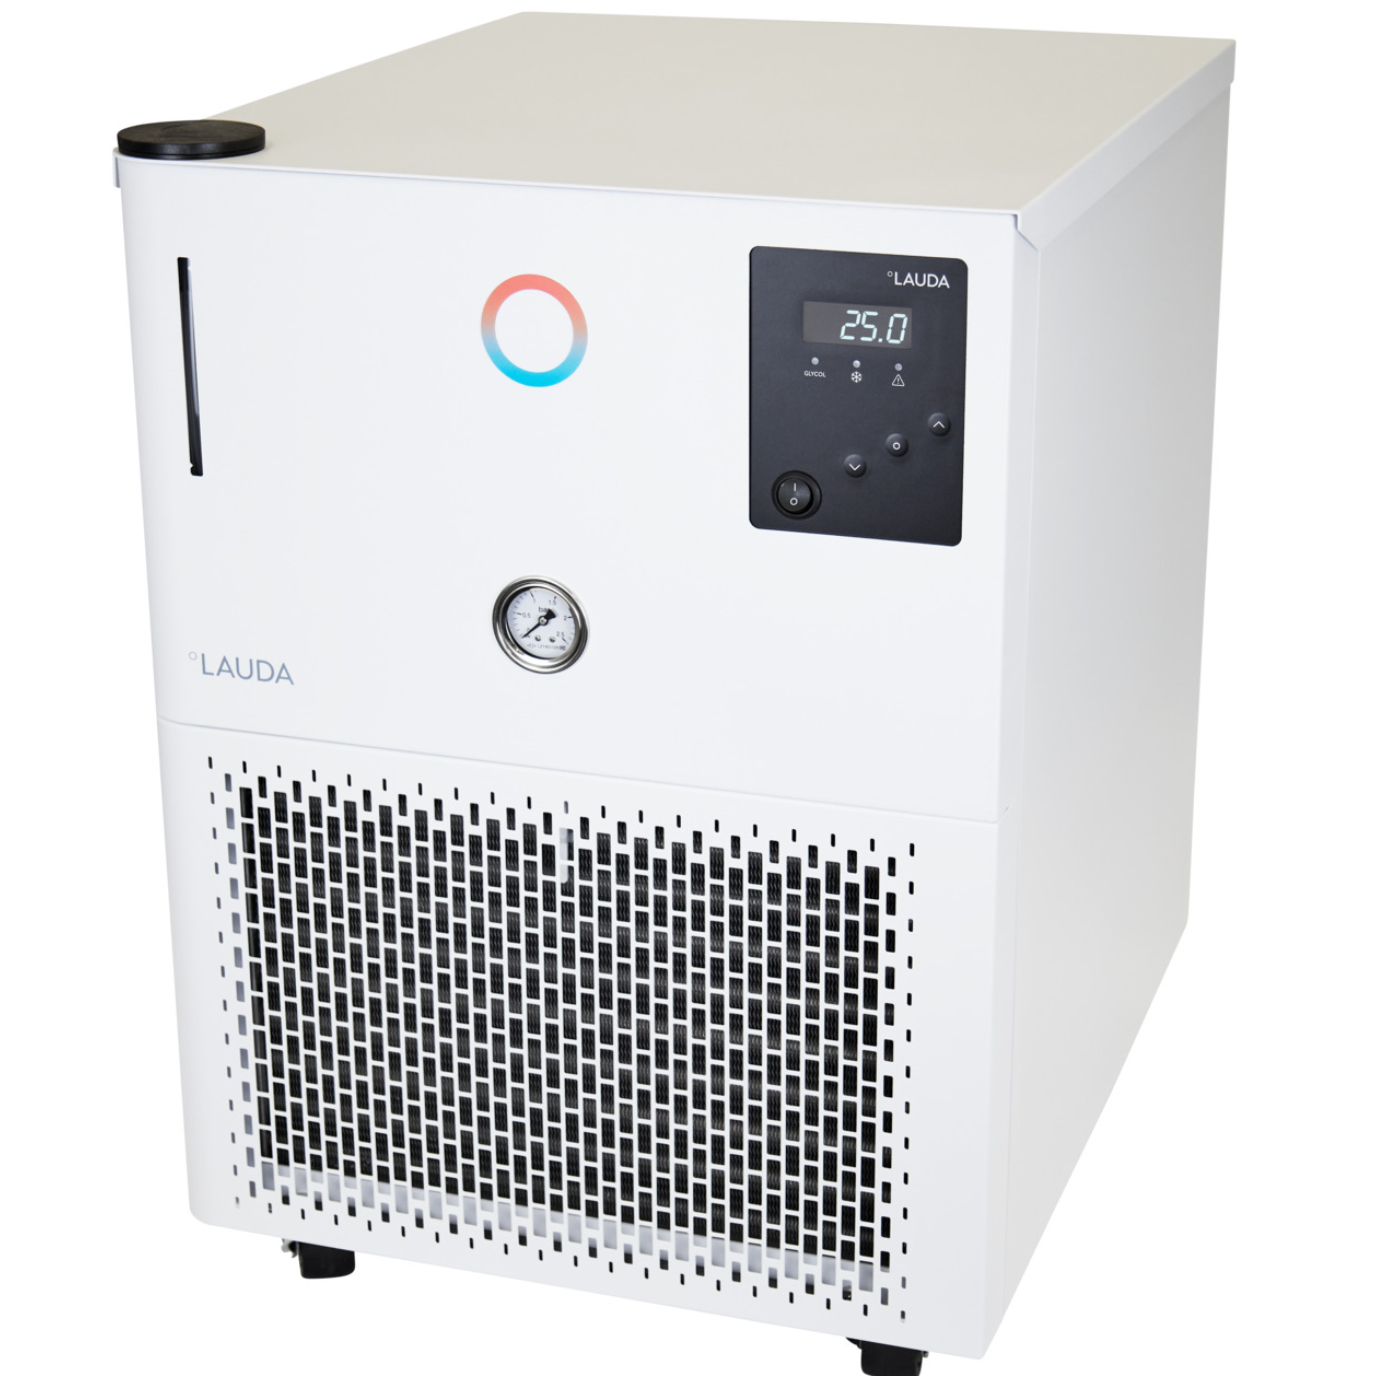 LAUDA Microcool MC 1200 实验室冷水机/冷却水循环器-10-40℃